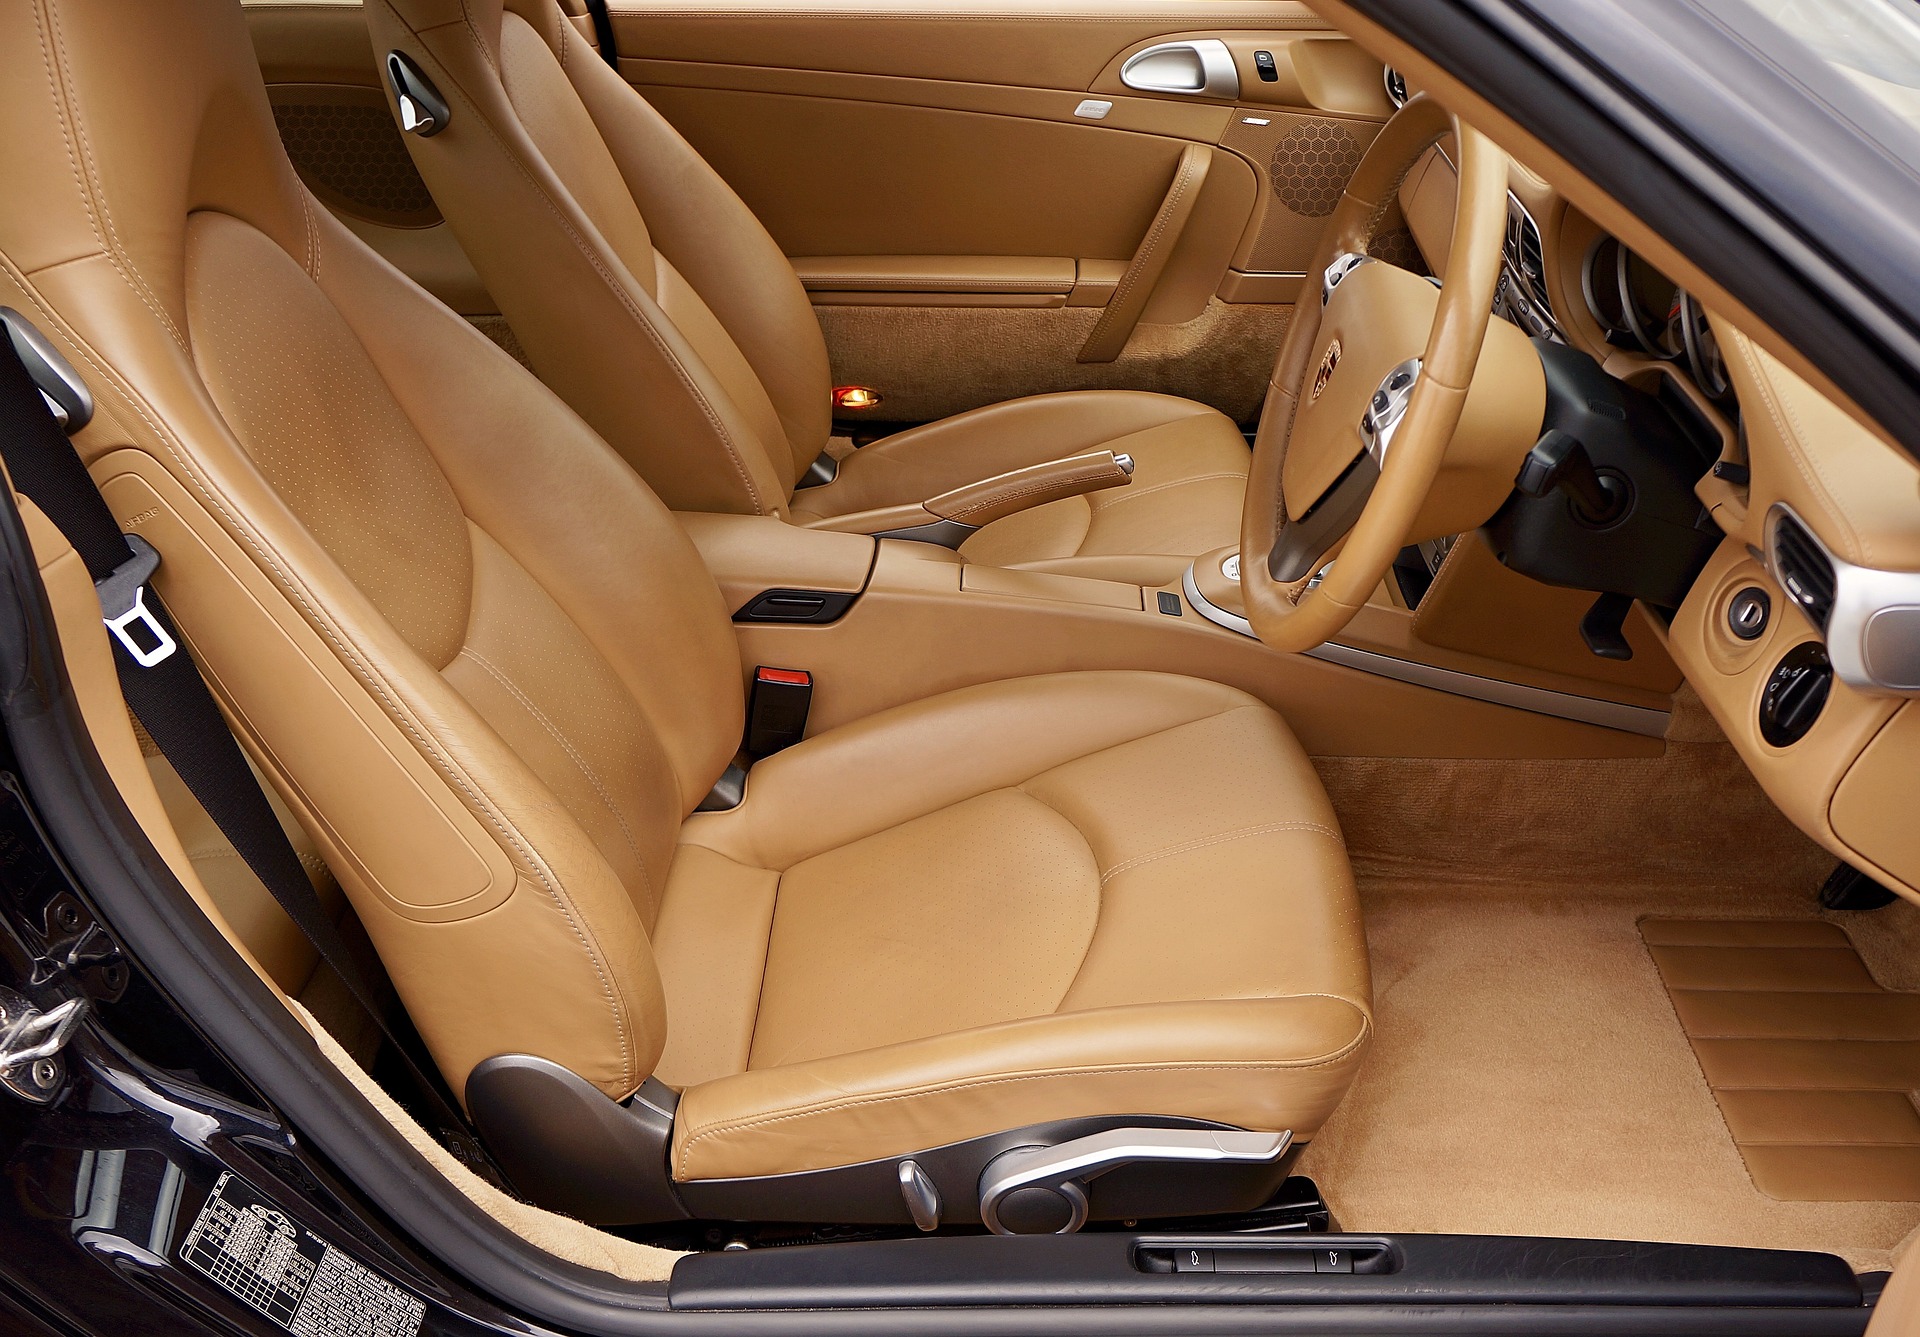 leather car seat